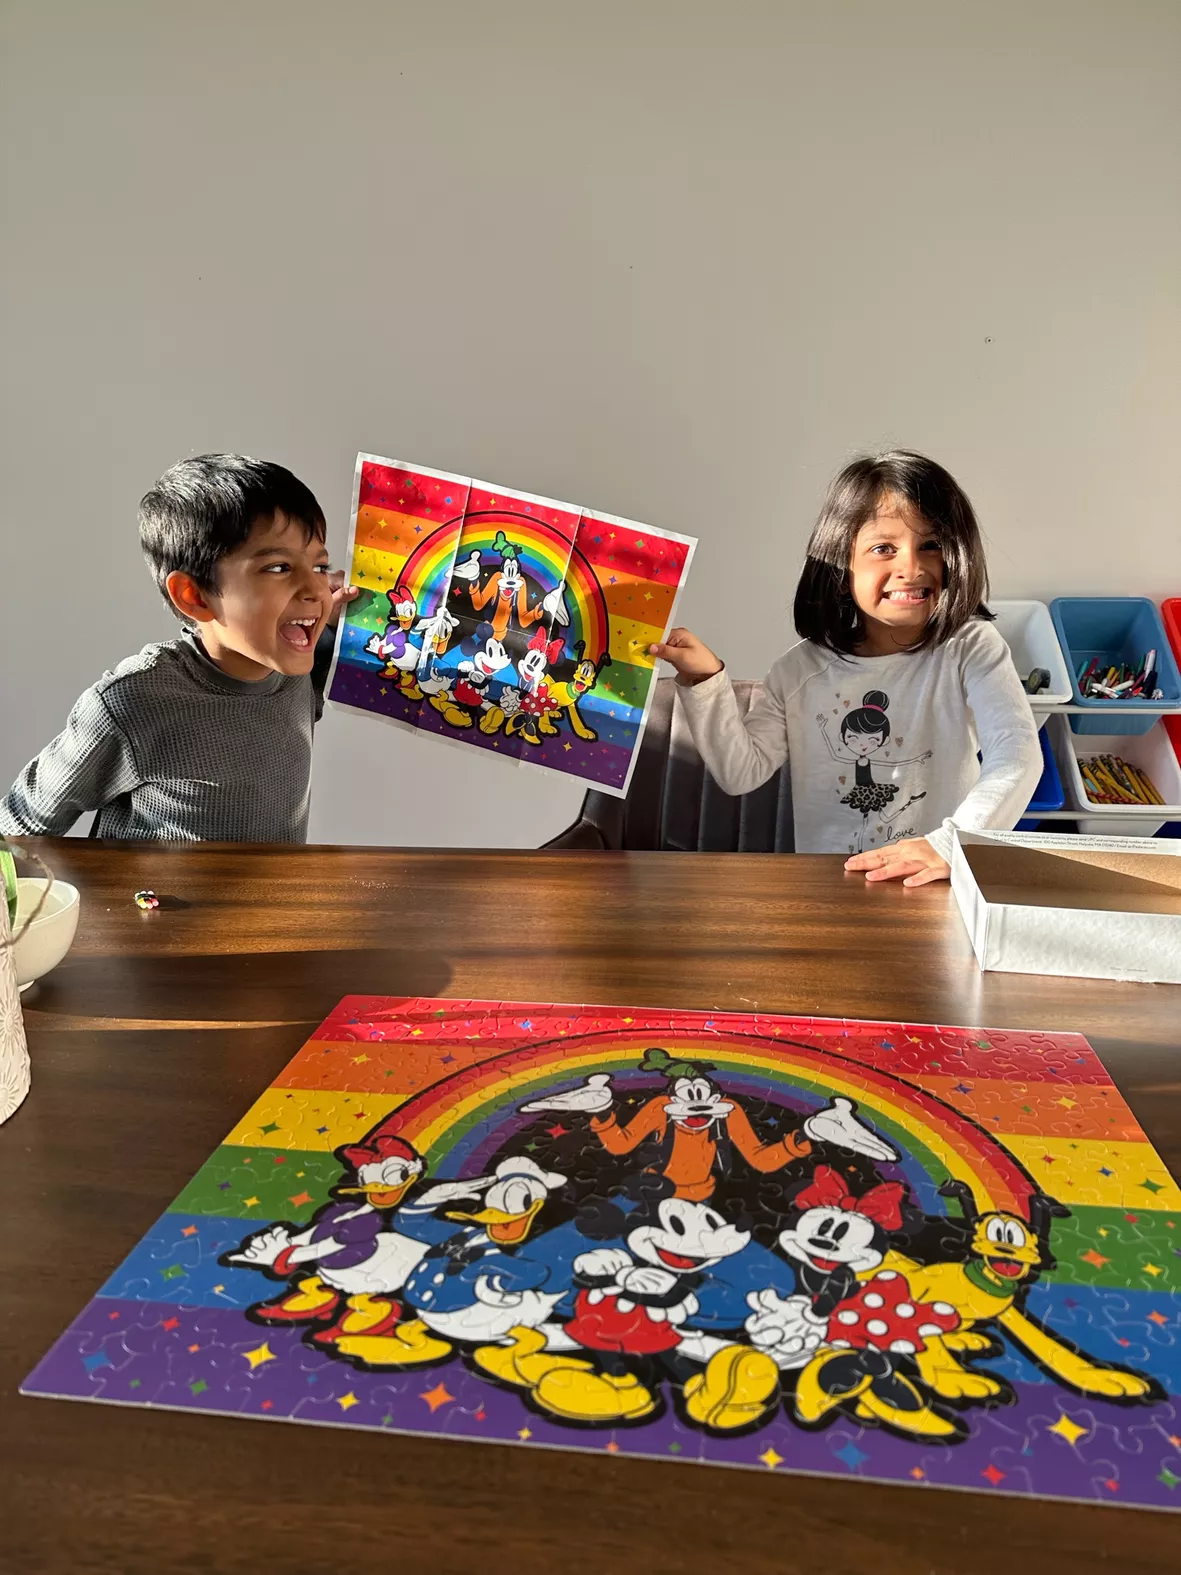 Disney Friends - Rainbow Friends- 200 Piece Puzzle